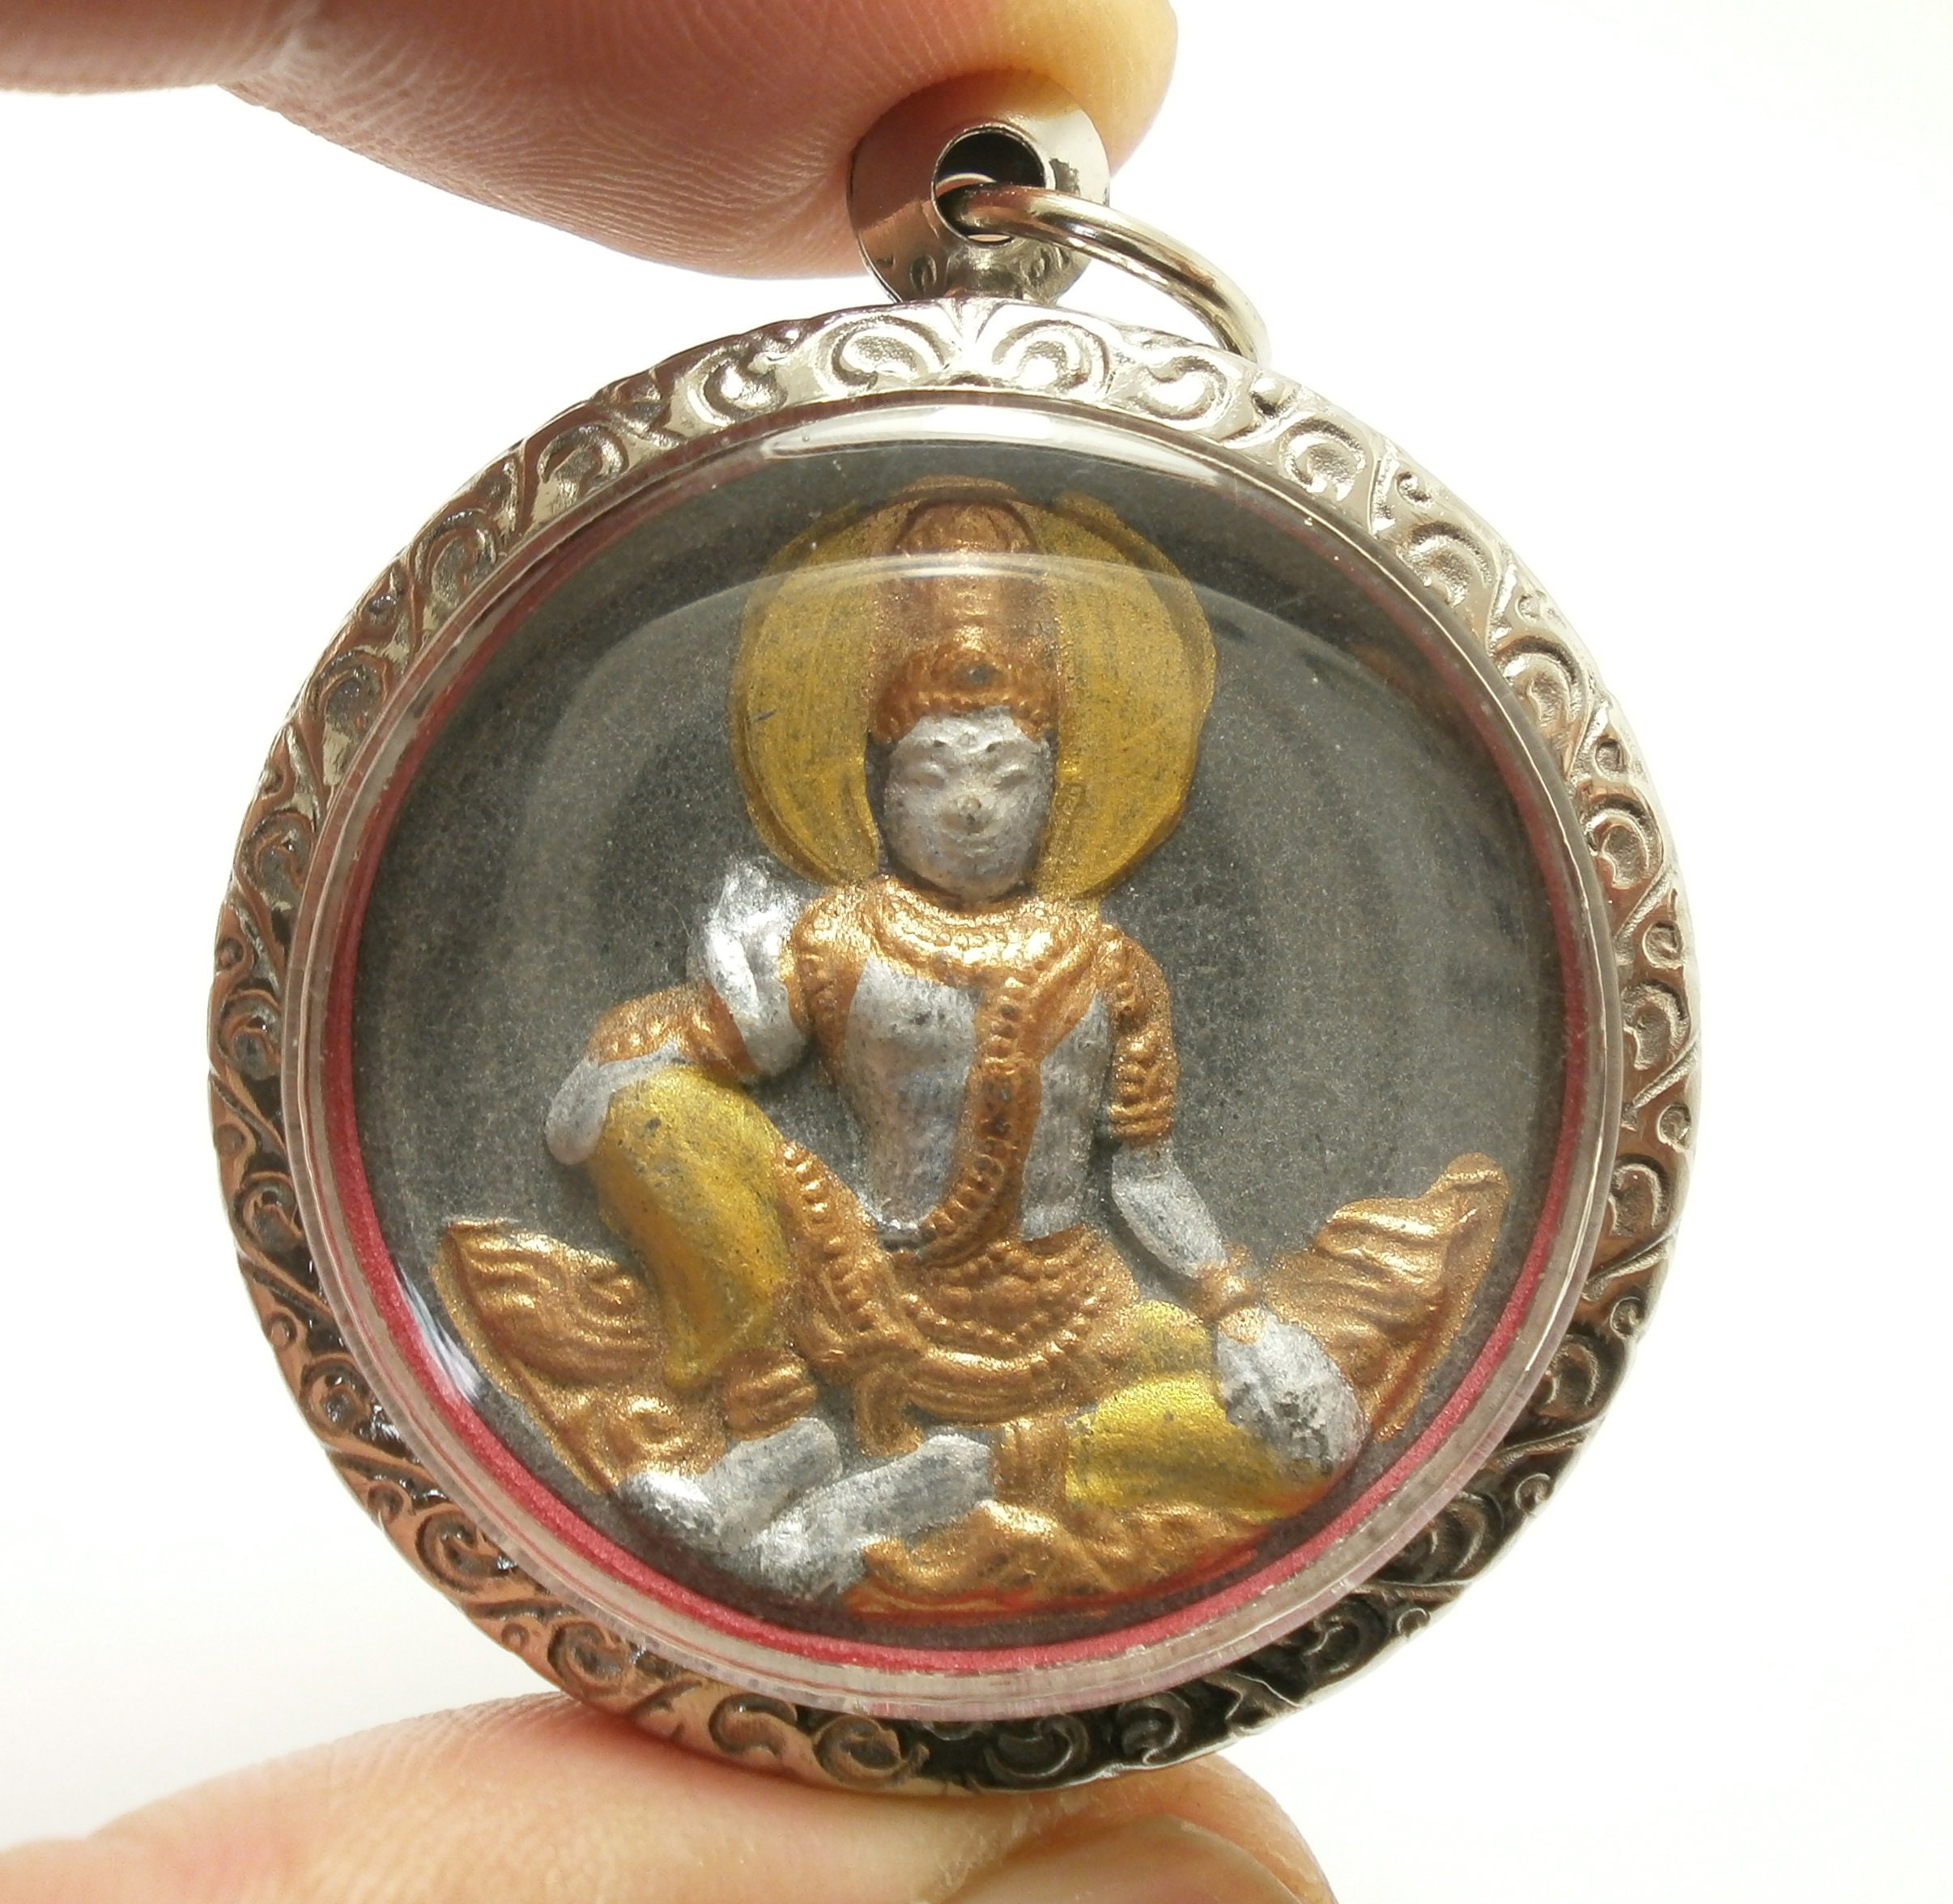 Jatukham Rammathep The King Of South Sea Jatukam Ramathep Buddha Amulet Pendant Bless For Success Rich Miracle Maker & Life Protection Gift